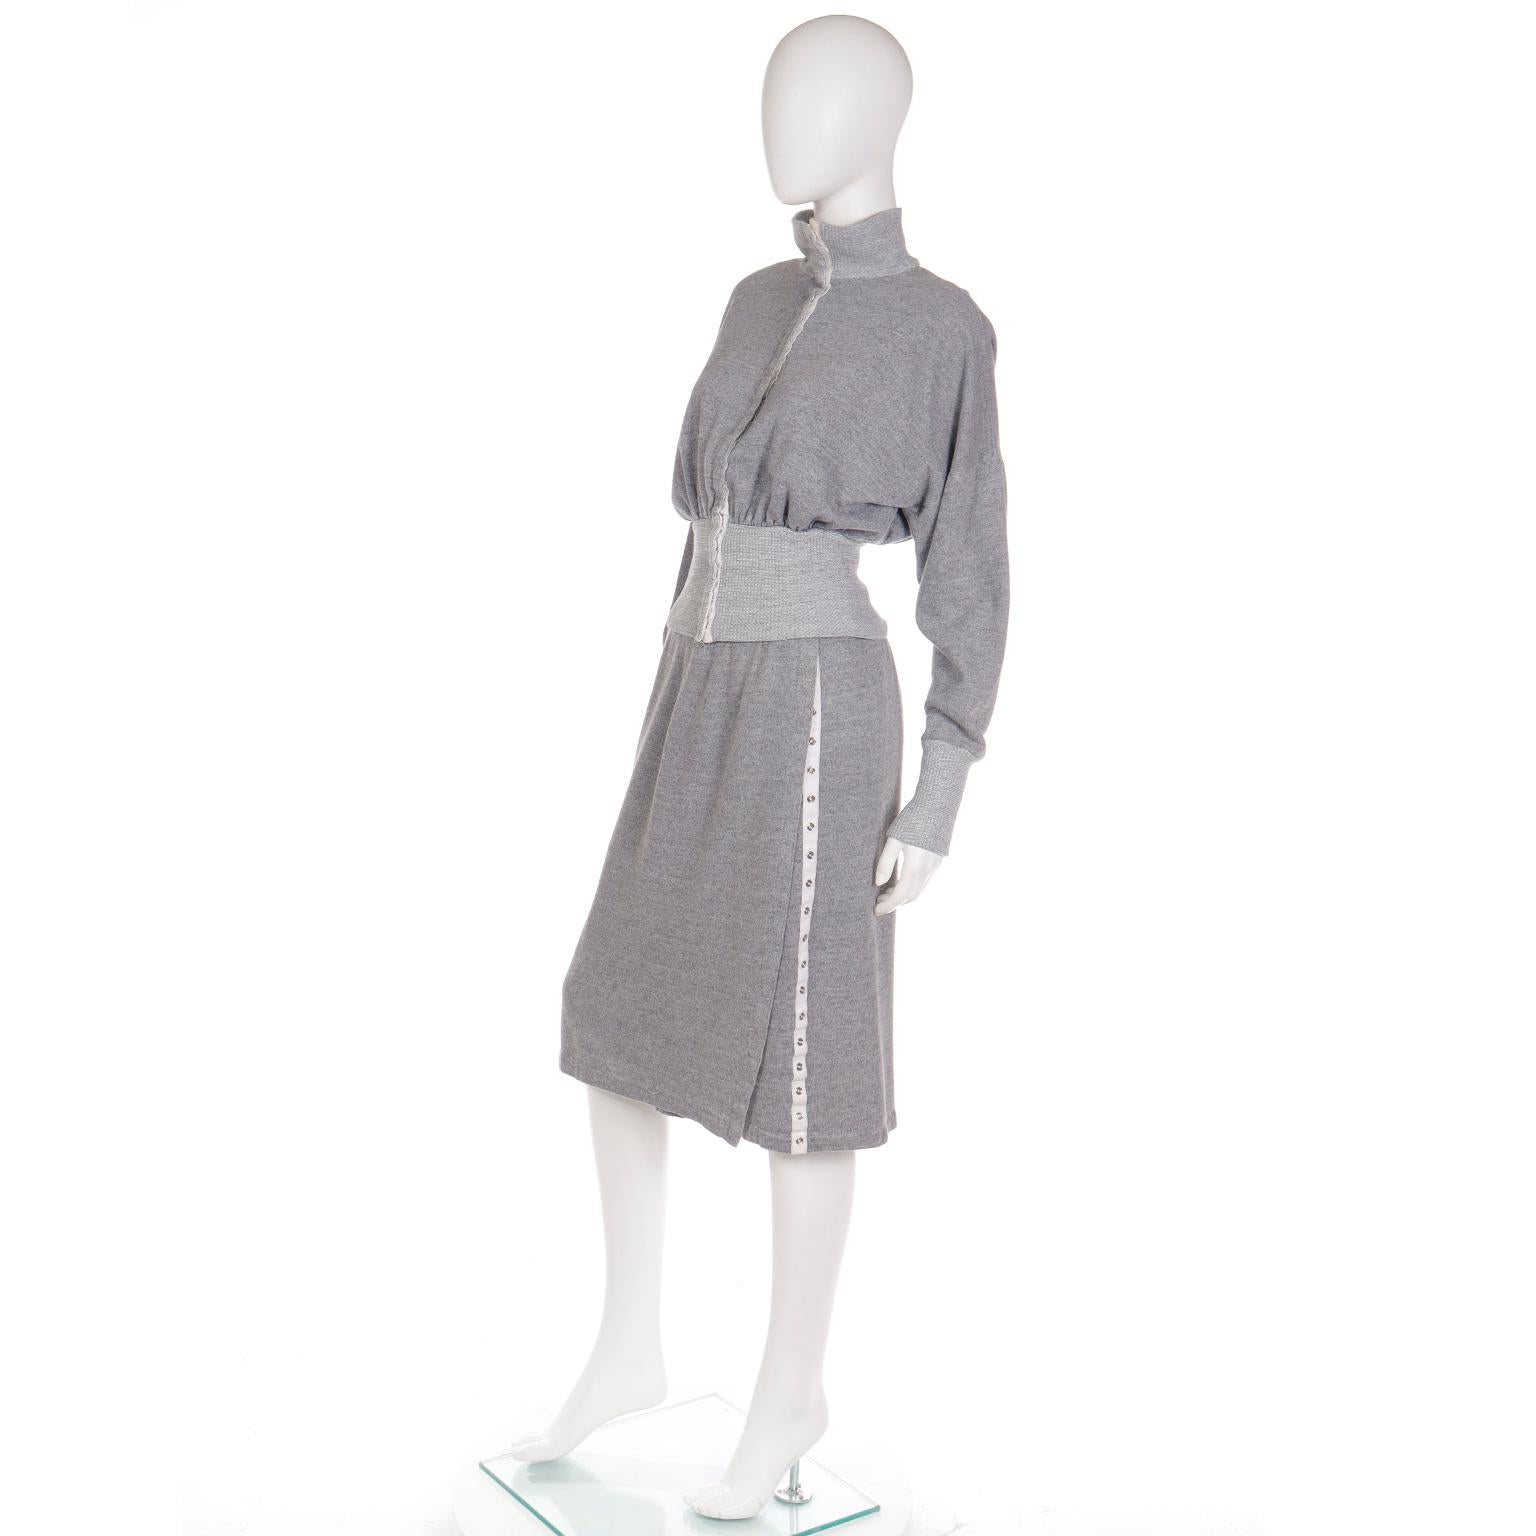 Norma Kamali 1980 Sweats Grey Sweatshirt 2 pc Dress w Snap Front Top & Skirt For Sale 1